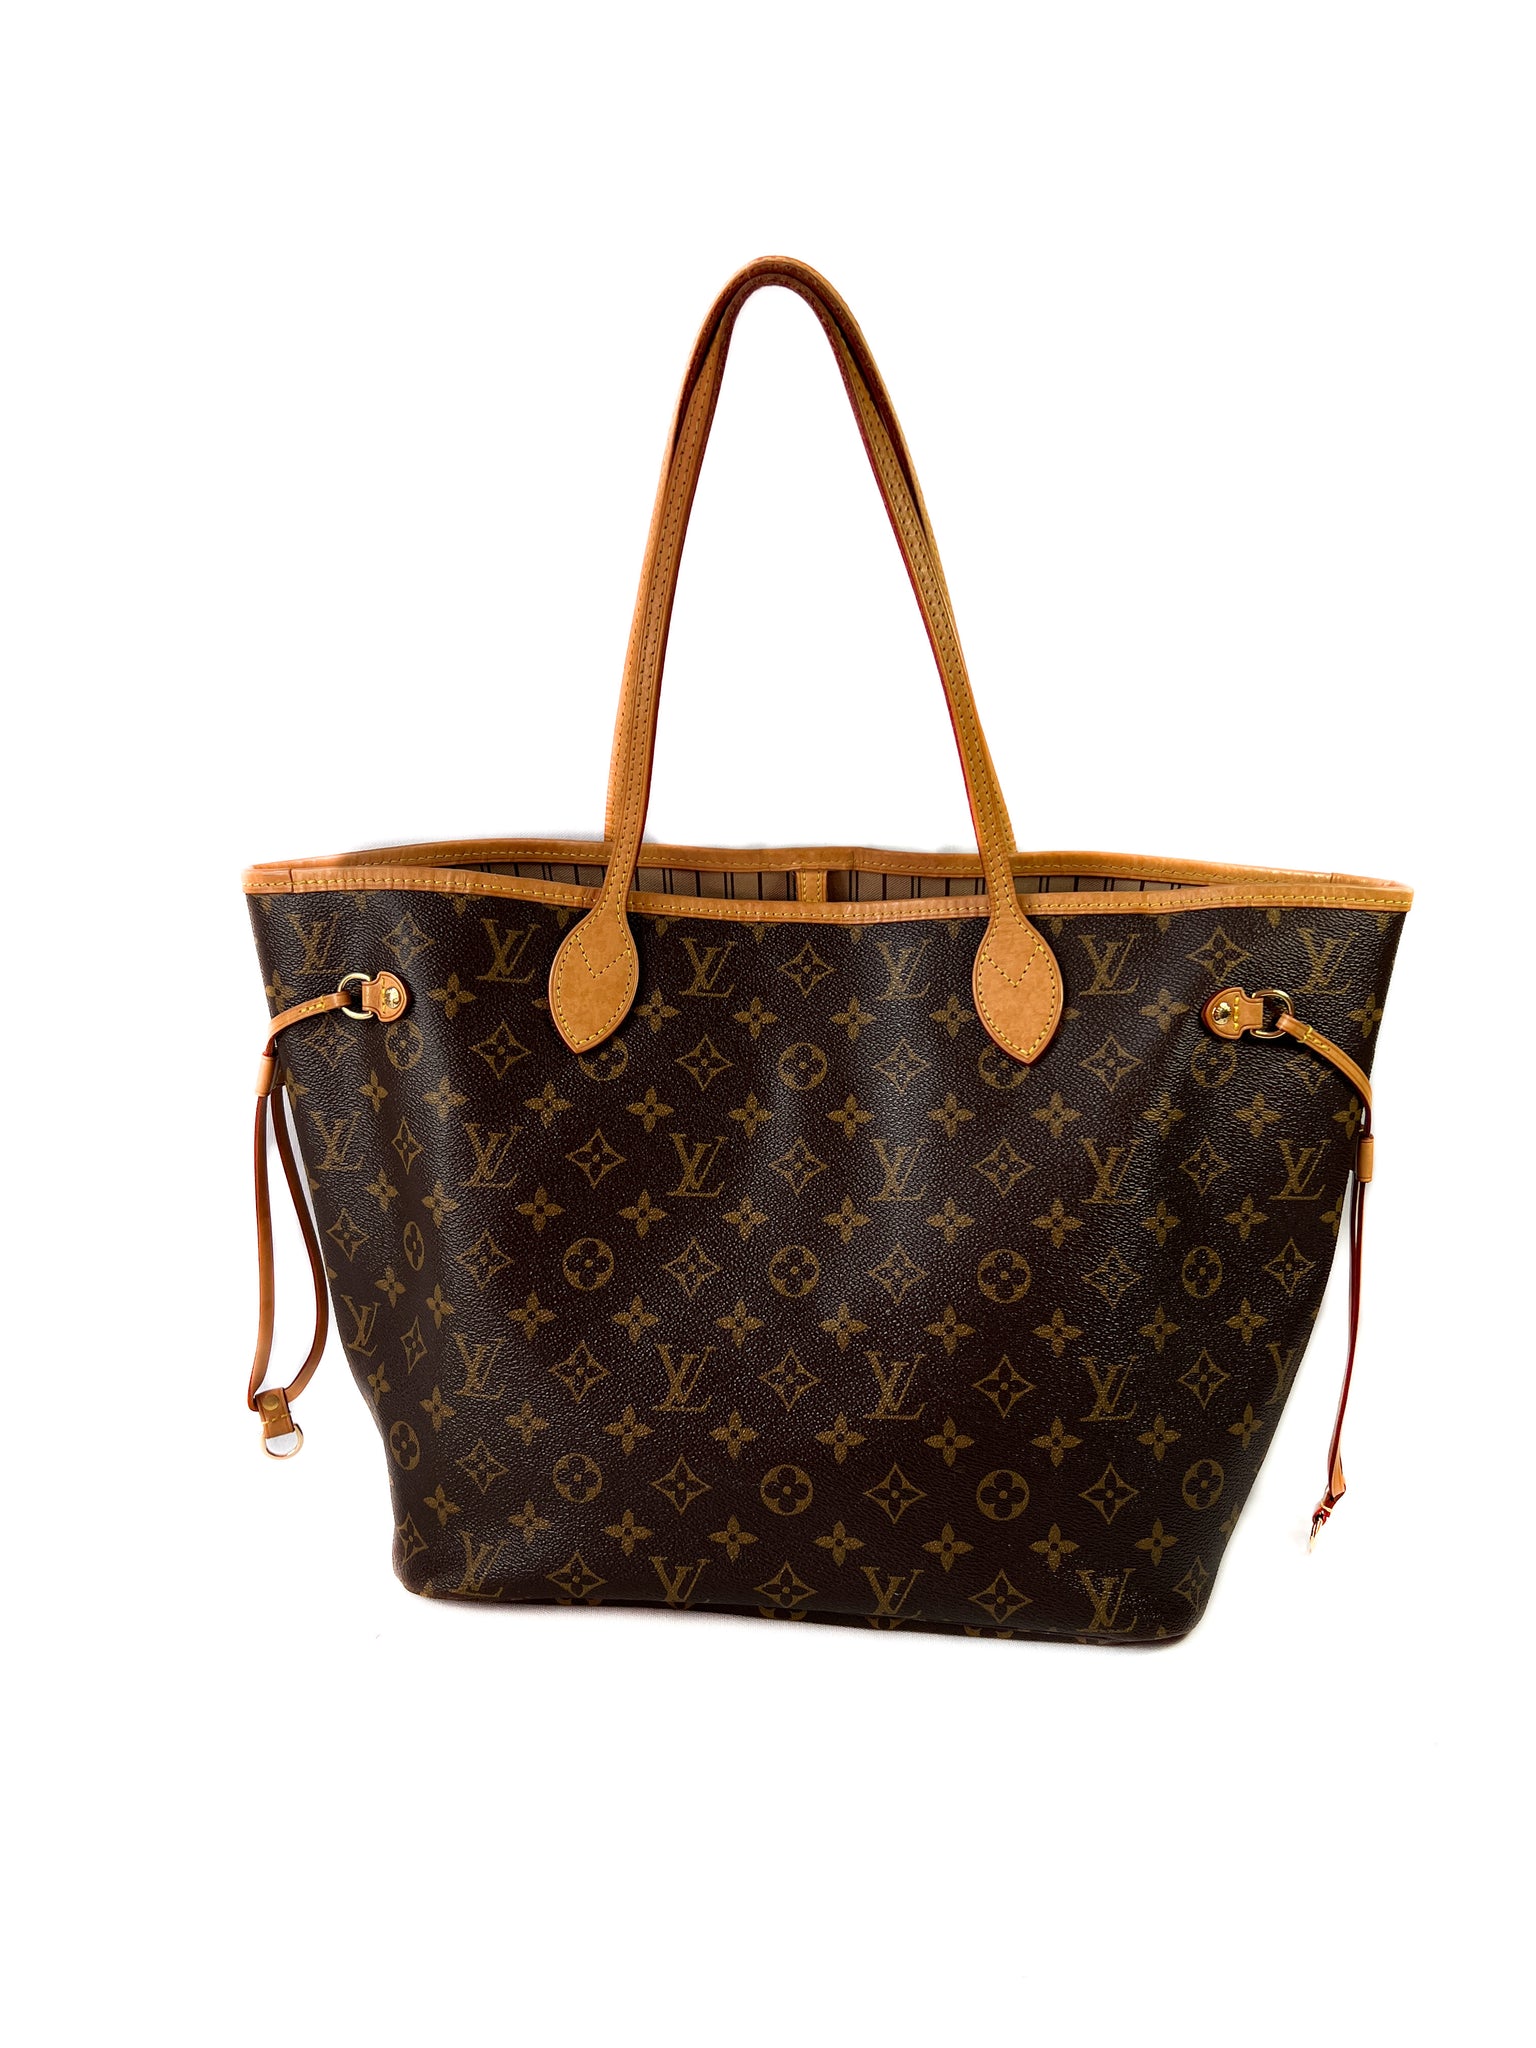 Louis Vuitton Handbags for sale in Beaver Falls, Pennsylvania